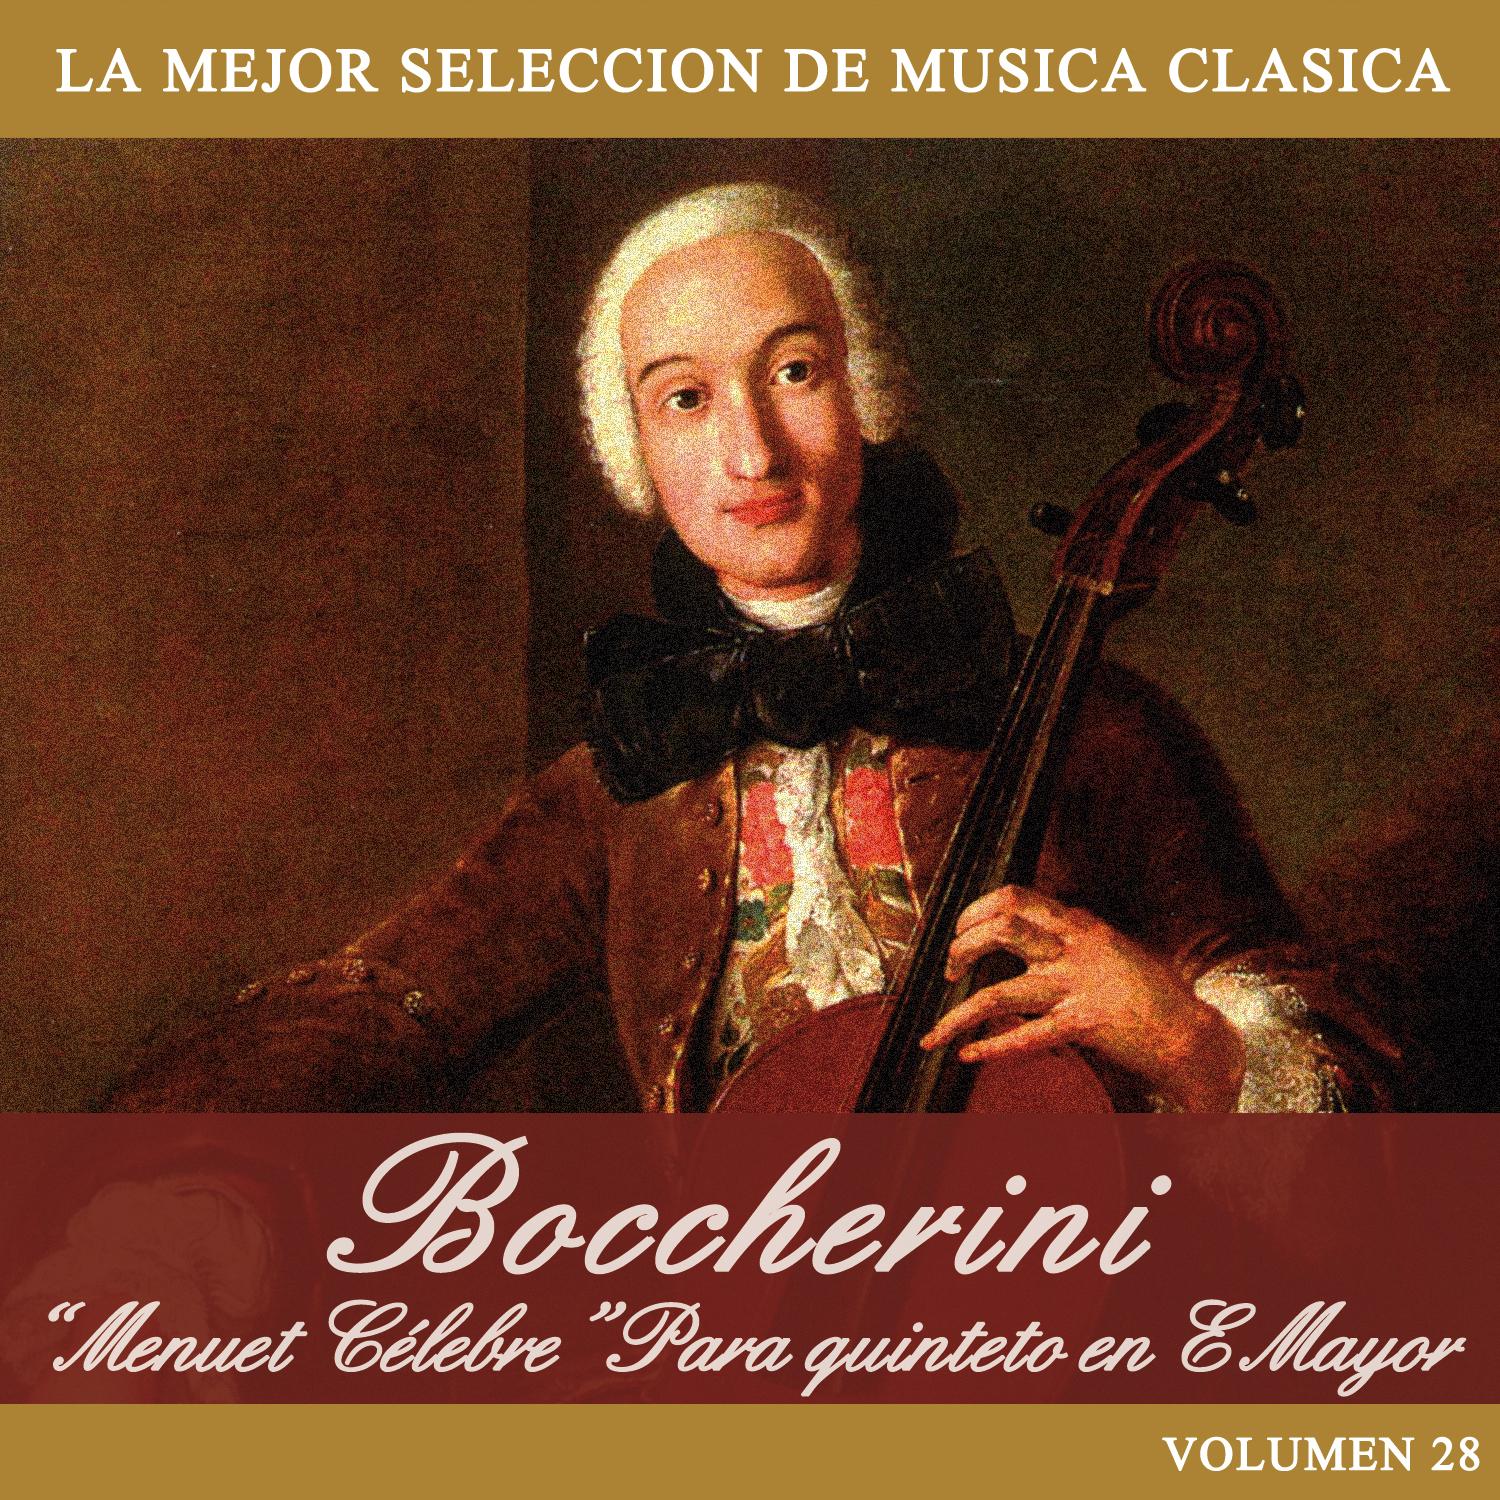 Boccherini: "Menuet Célebre" Para quinteto en E Mayor